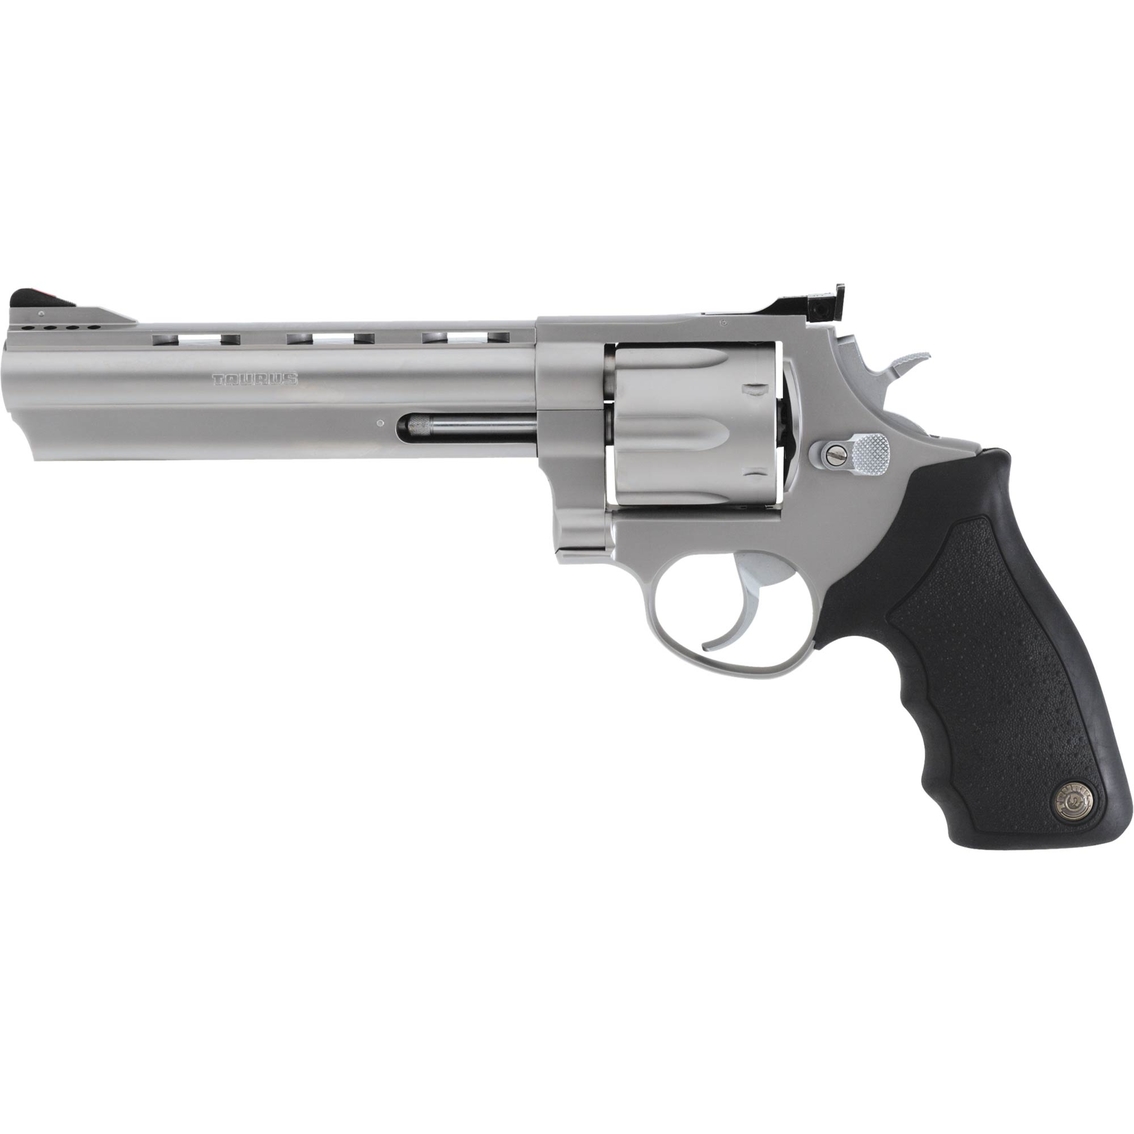 Taurus Model 44 44 Mag 6.5 in. Barrel 6 Rnd Revolver Stainless Steel - Image 2 of 2